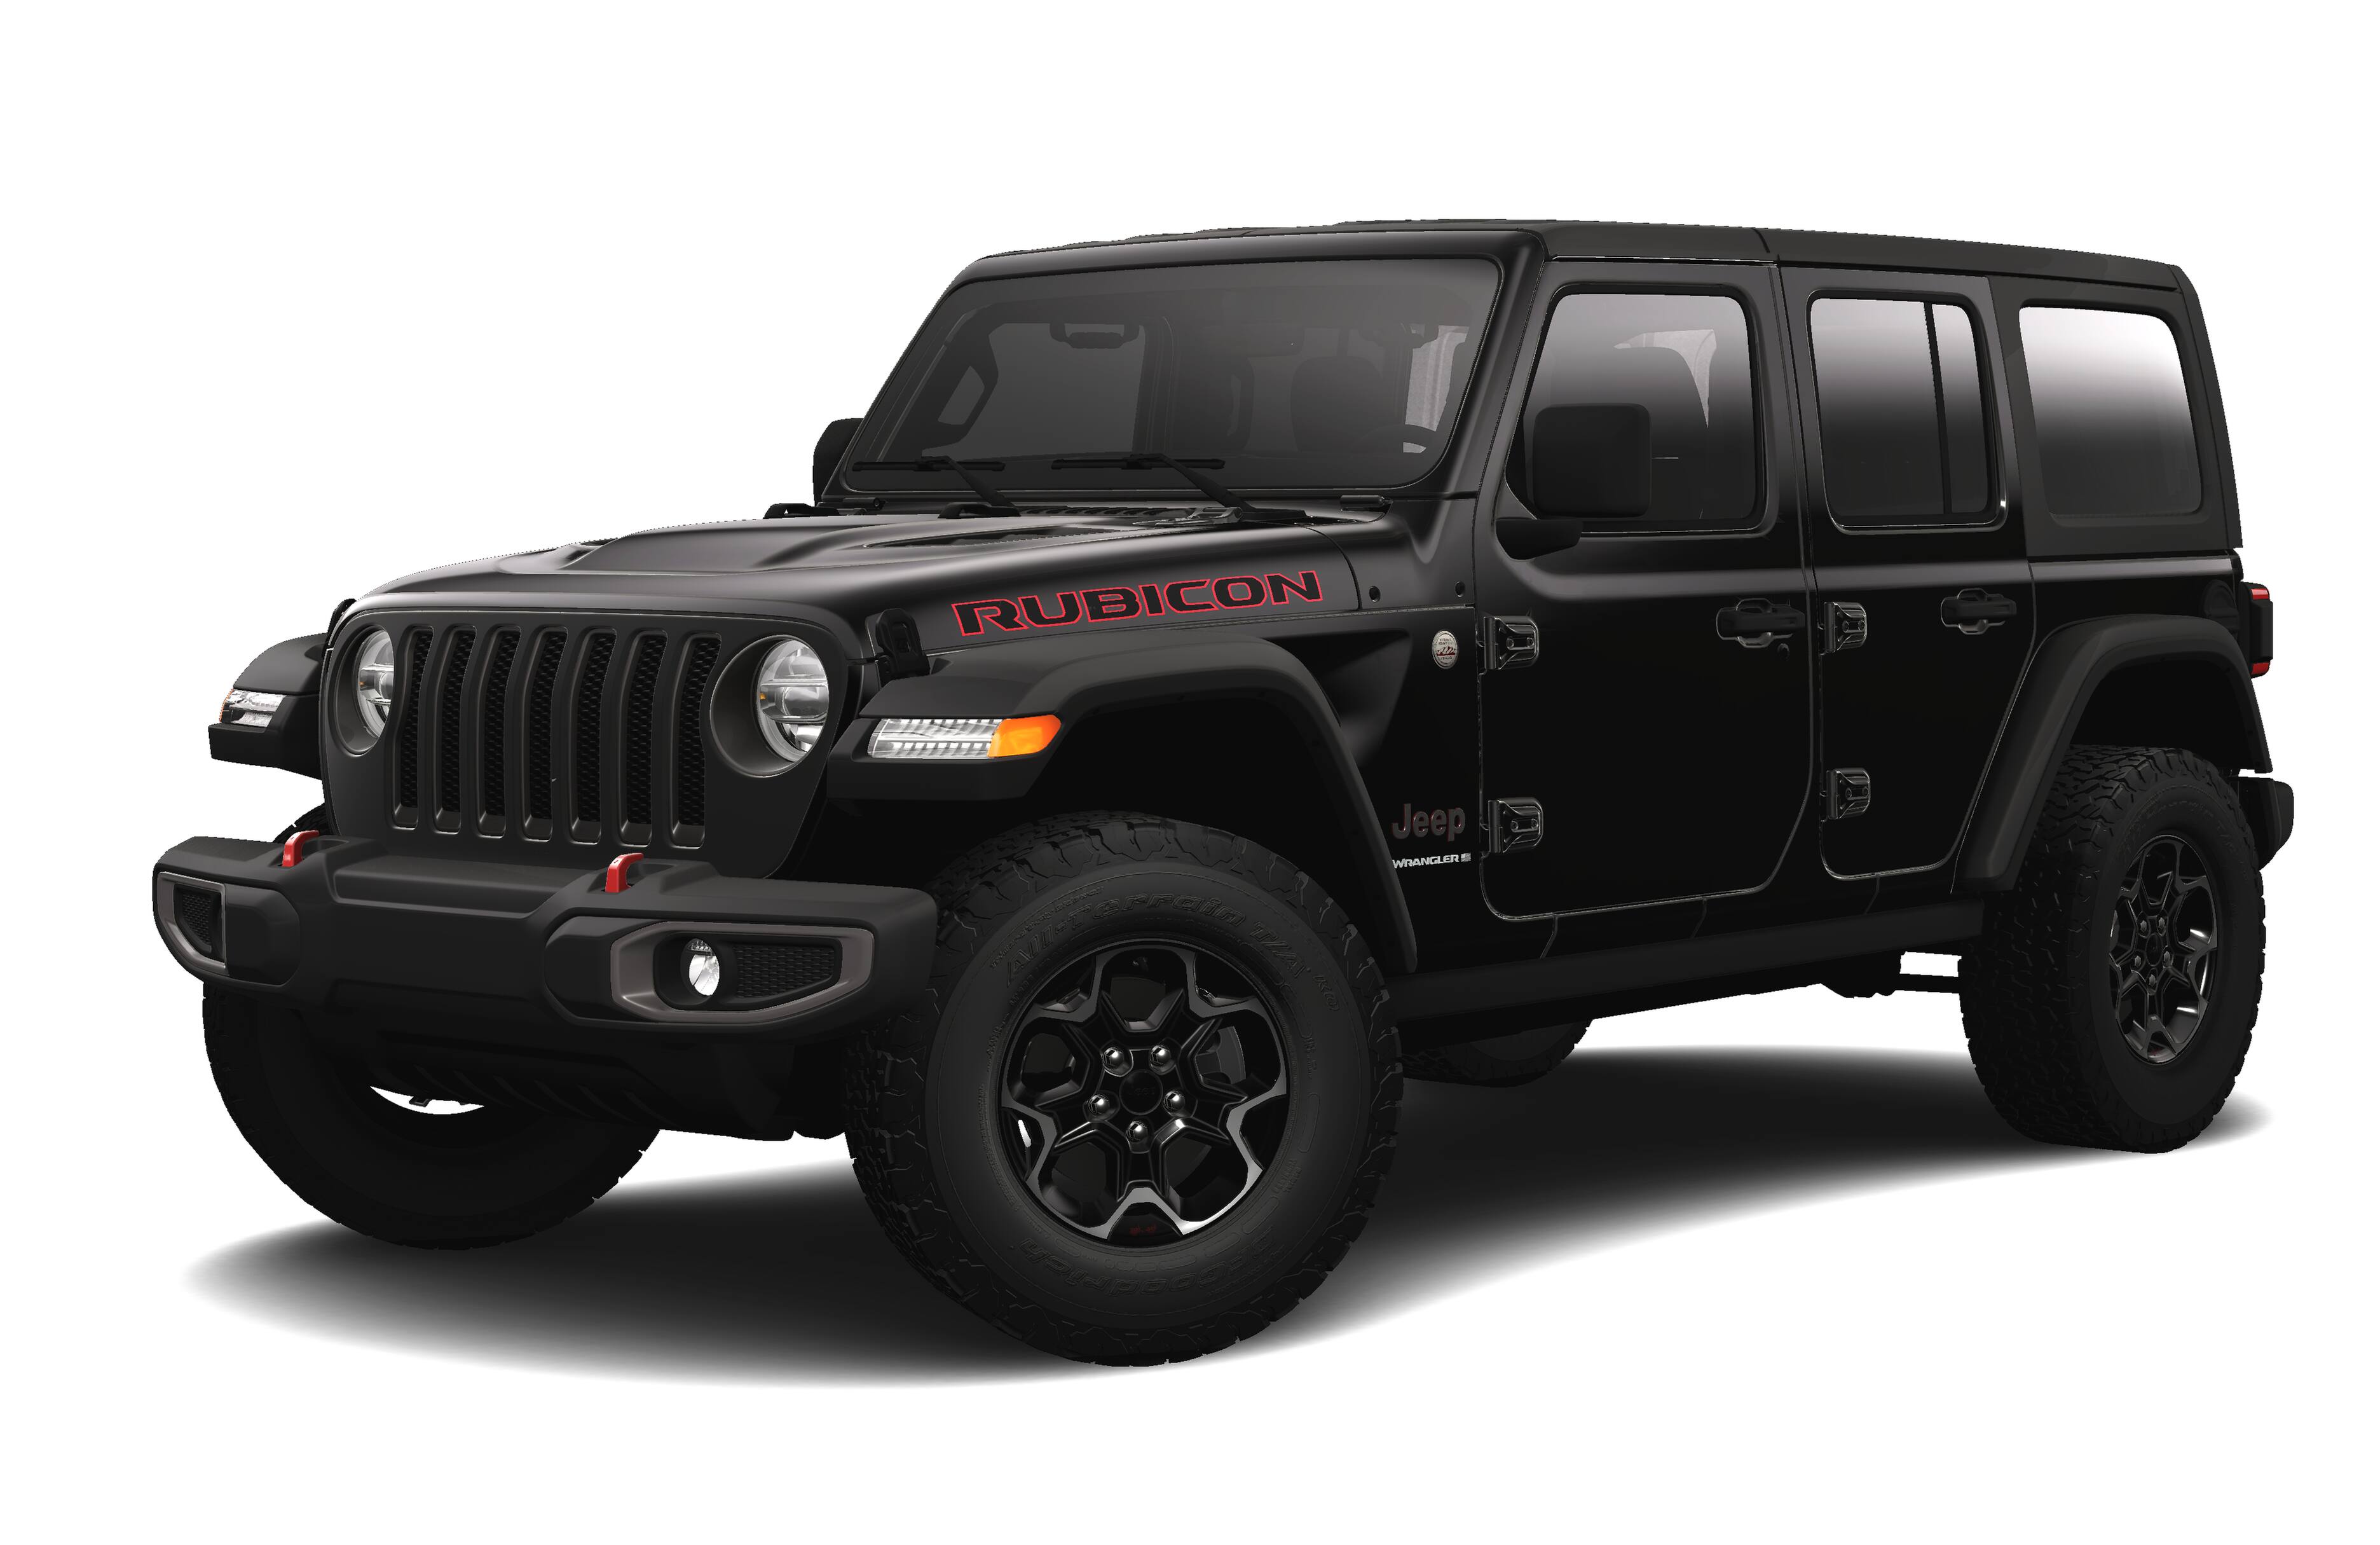 2023 Jeep Wrangler Trim Levels Explained - San Antonio TX | Ancira Jeep